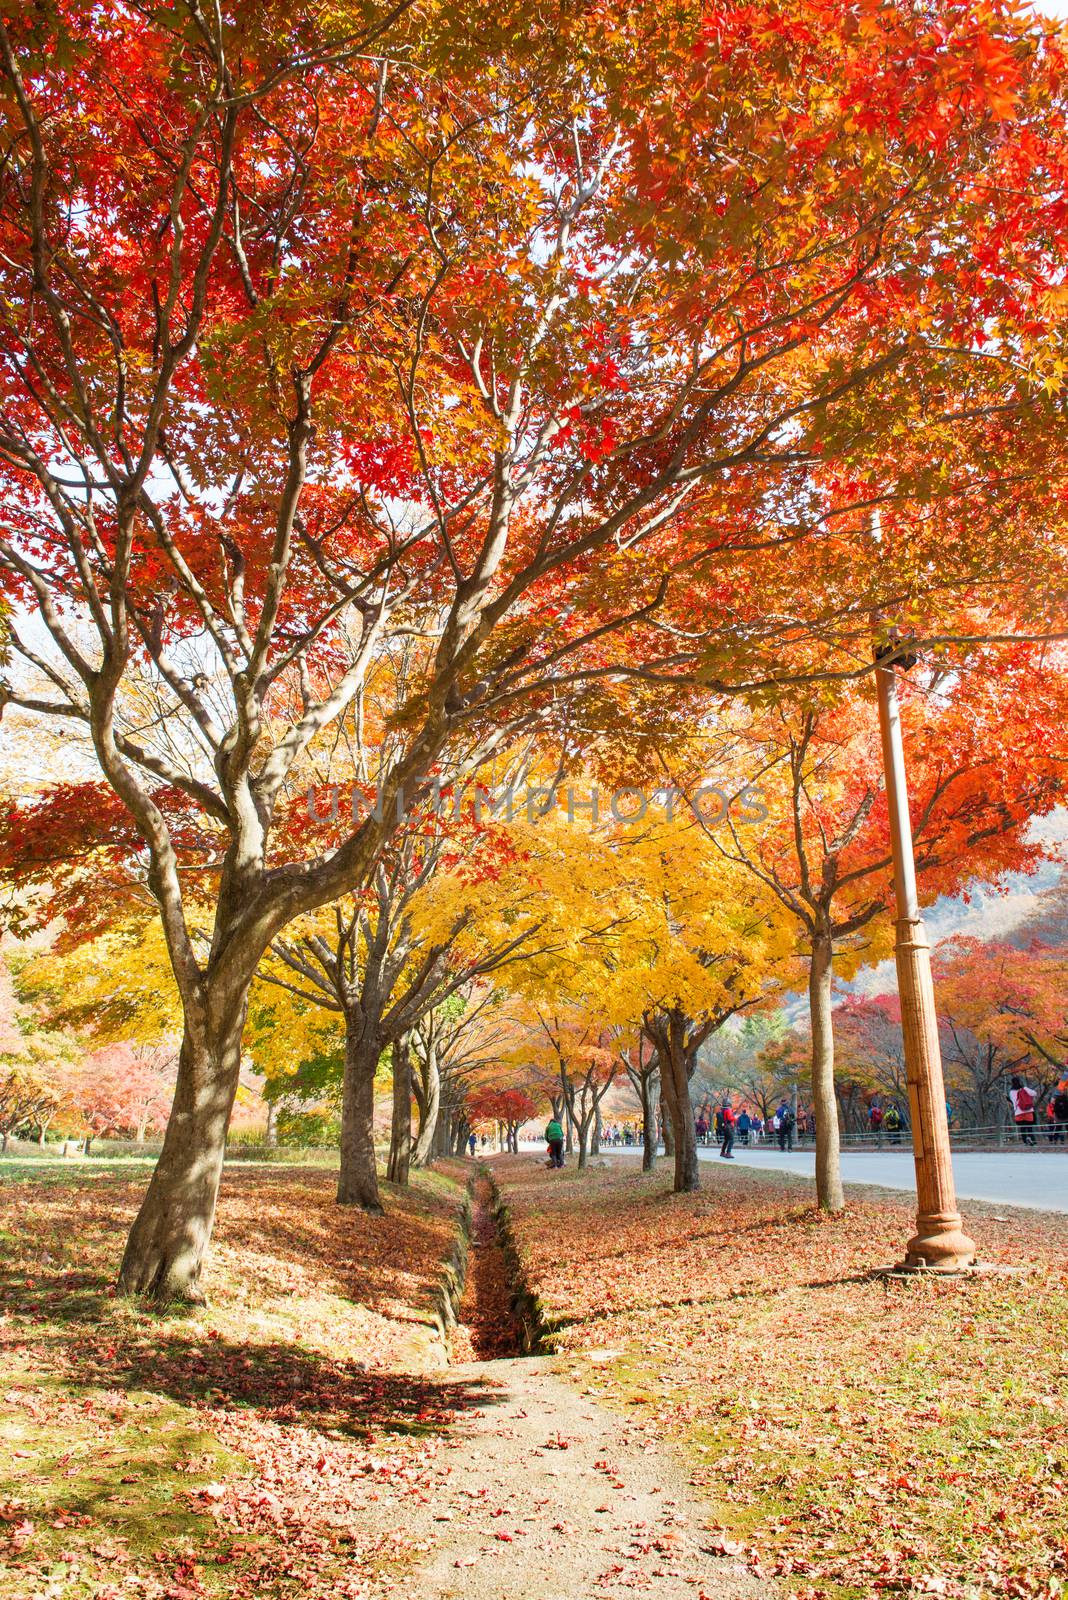 Tourists taking photos of the beautiful scenery around Naejangsan,South Korea during autumn seasonใ by gutarphotoghaphy